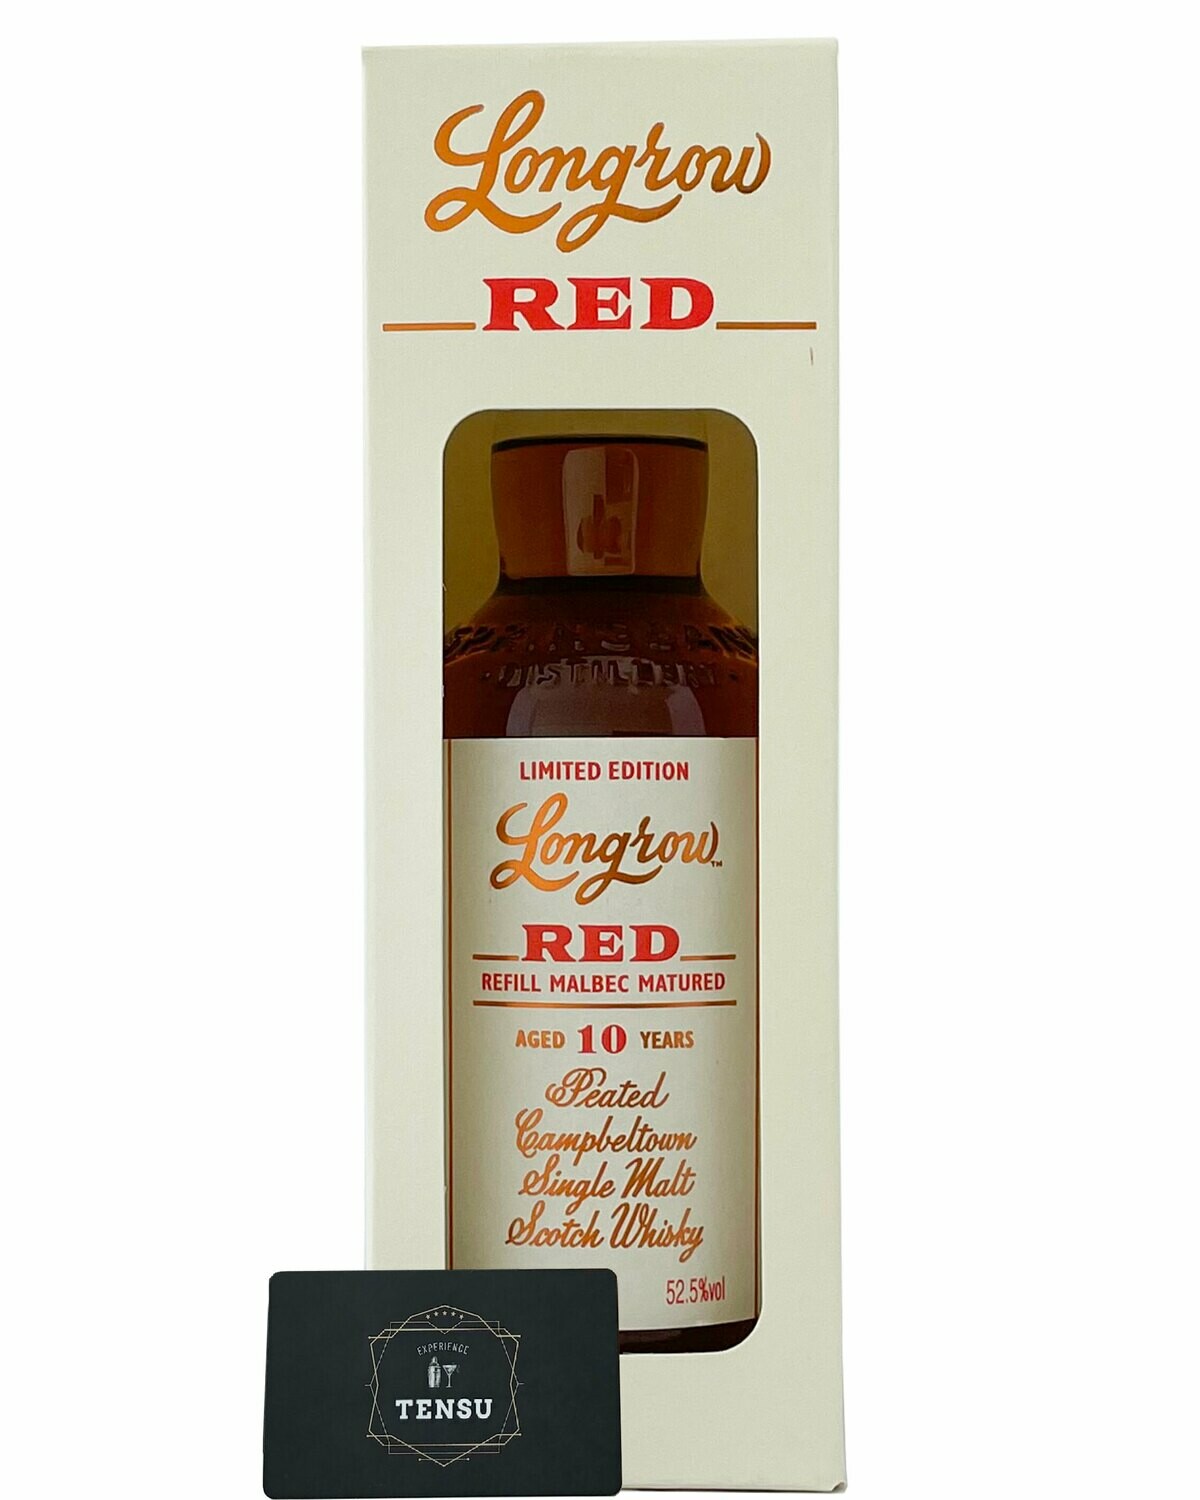 Longrow RED 10Y Refill Malbec (2020) 52.5 "OB"